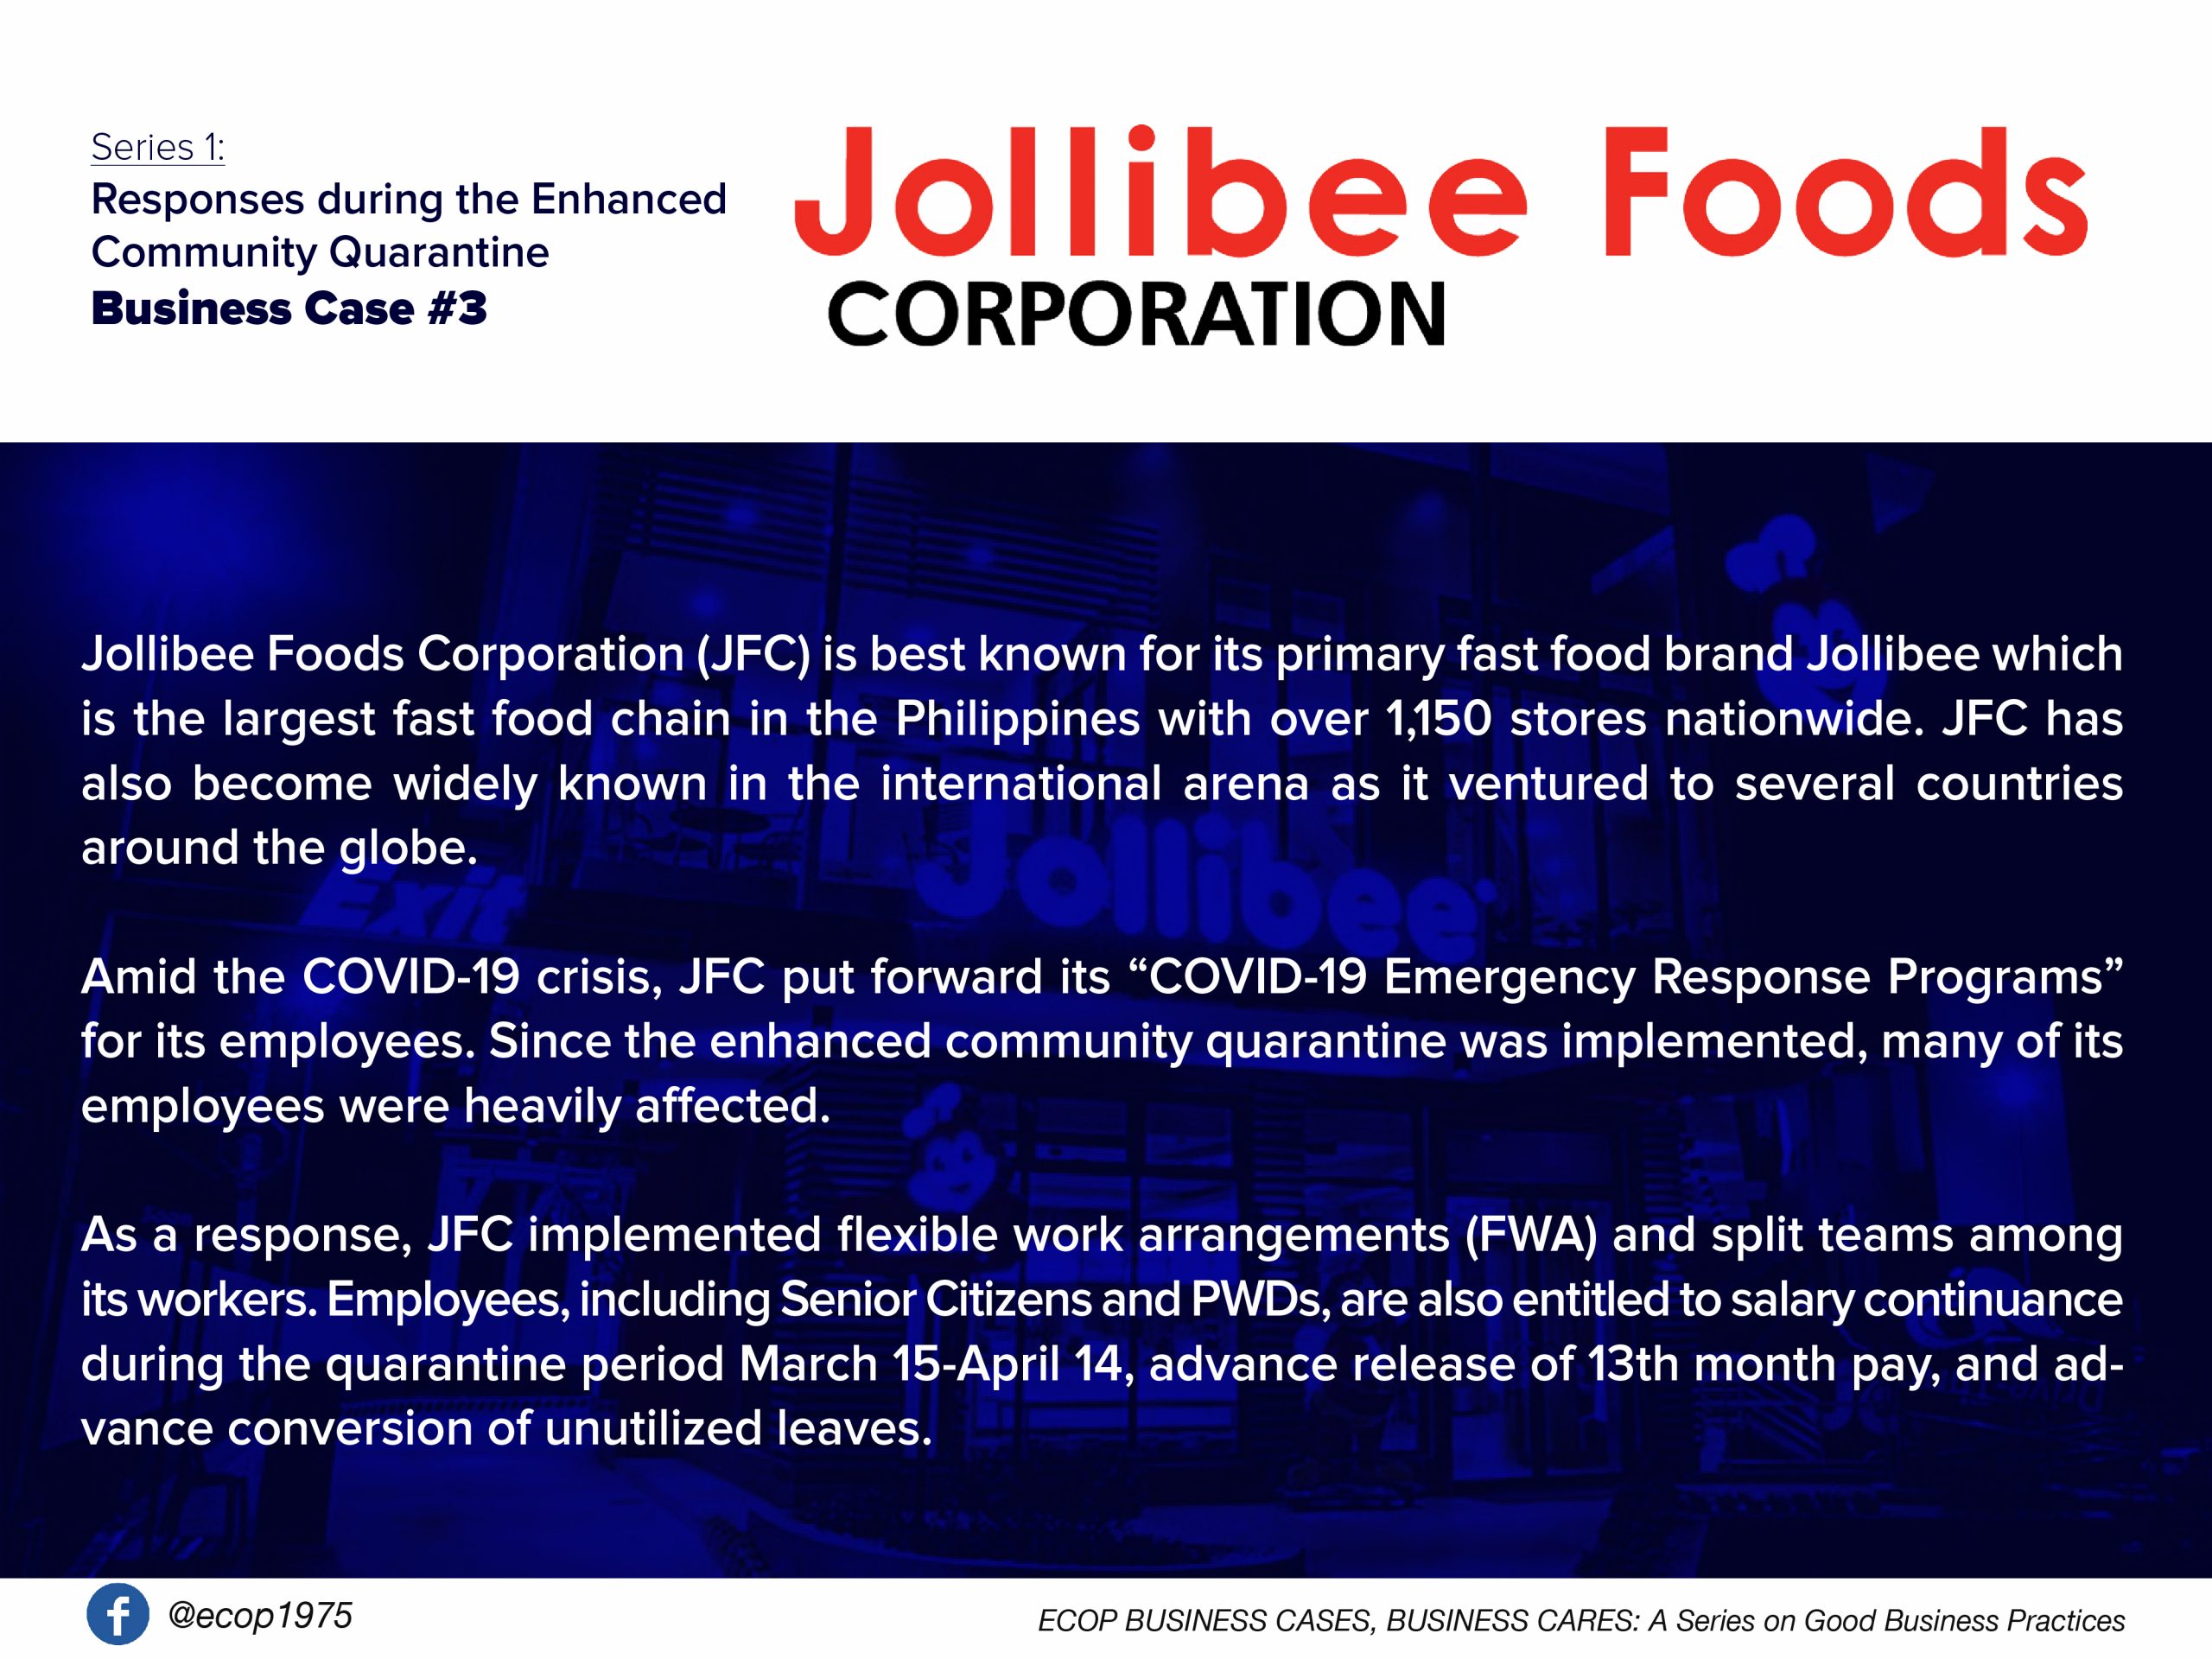 01-Jollibee foods corporation amid the COVID-19 crisis